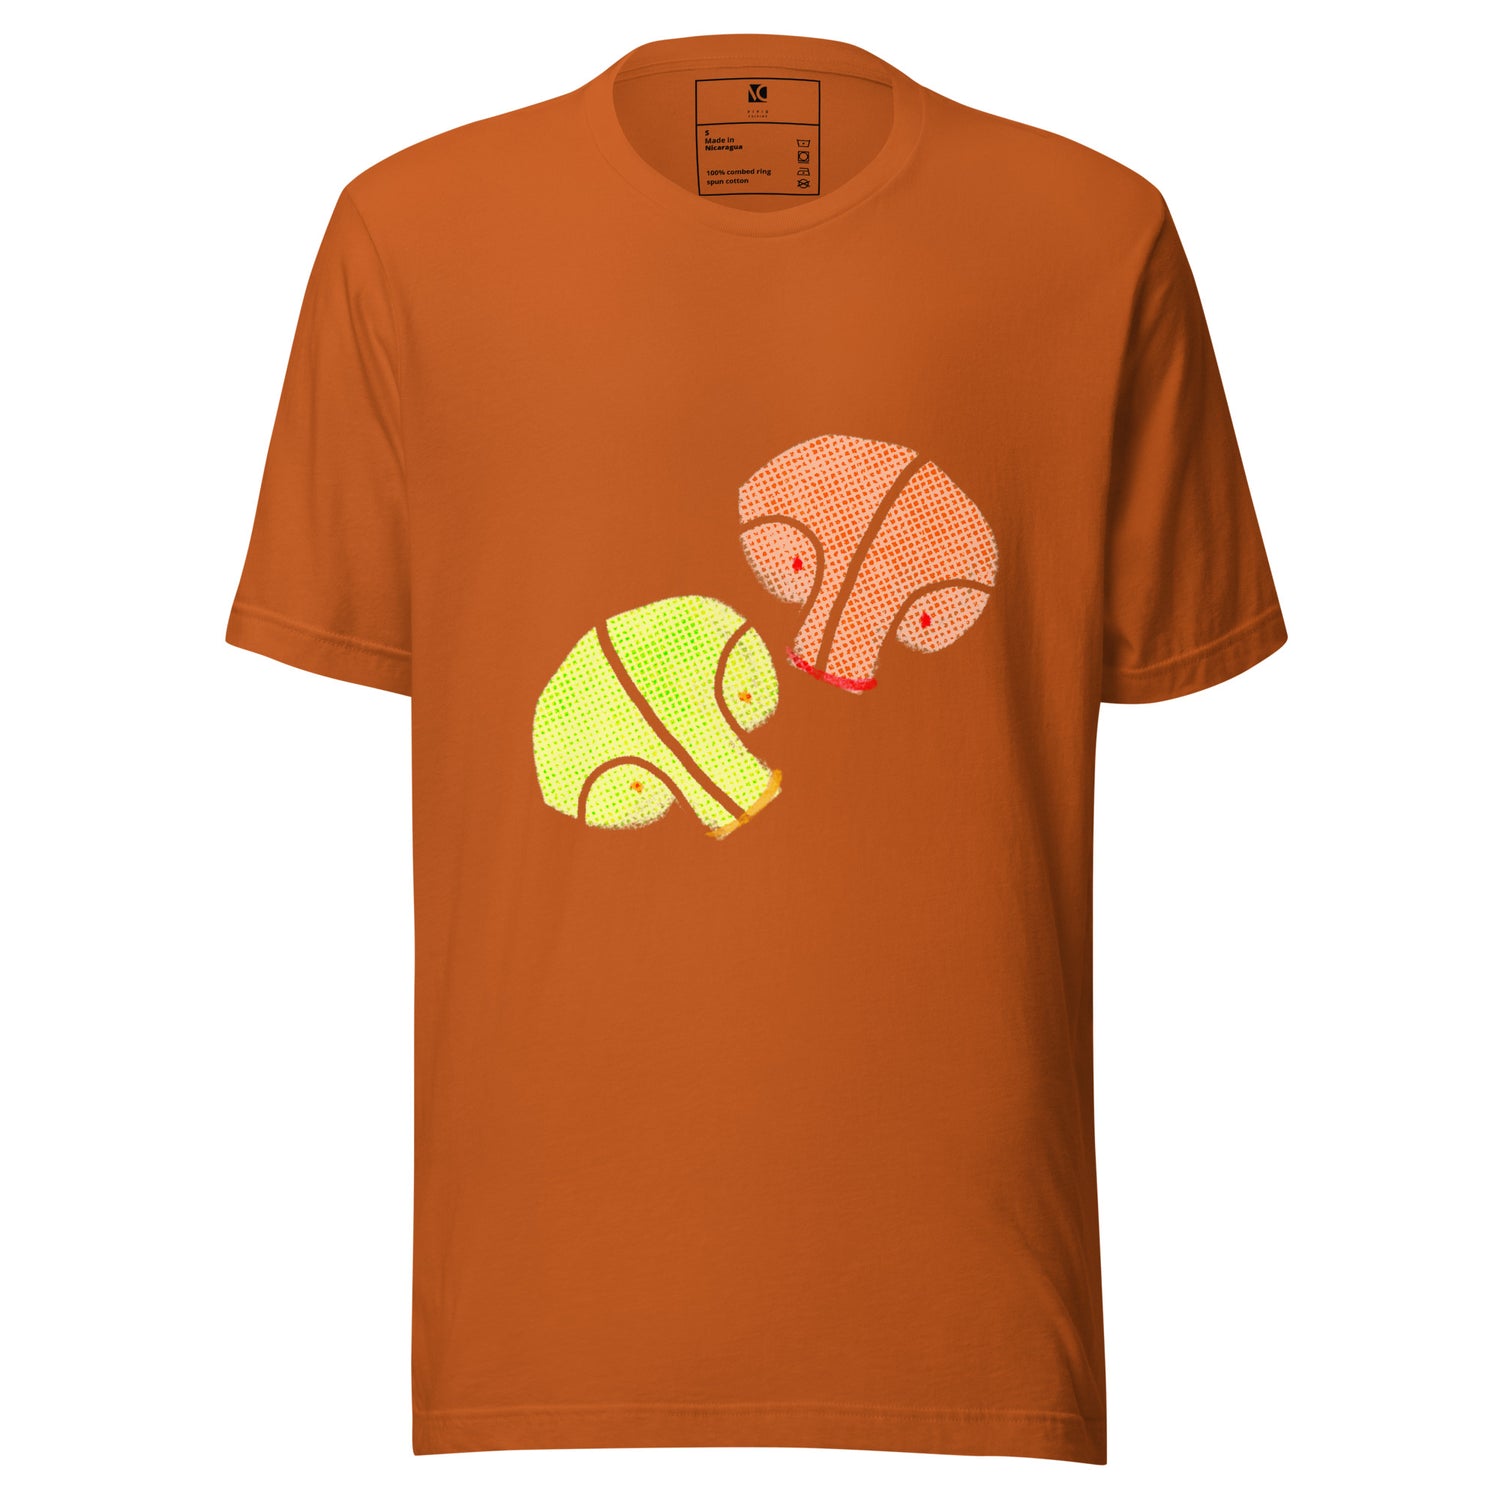 Champiñiones - Unisex T-Shirt